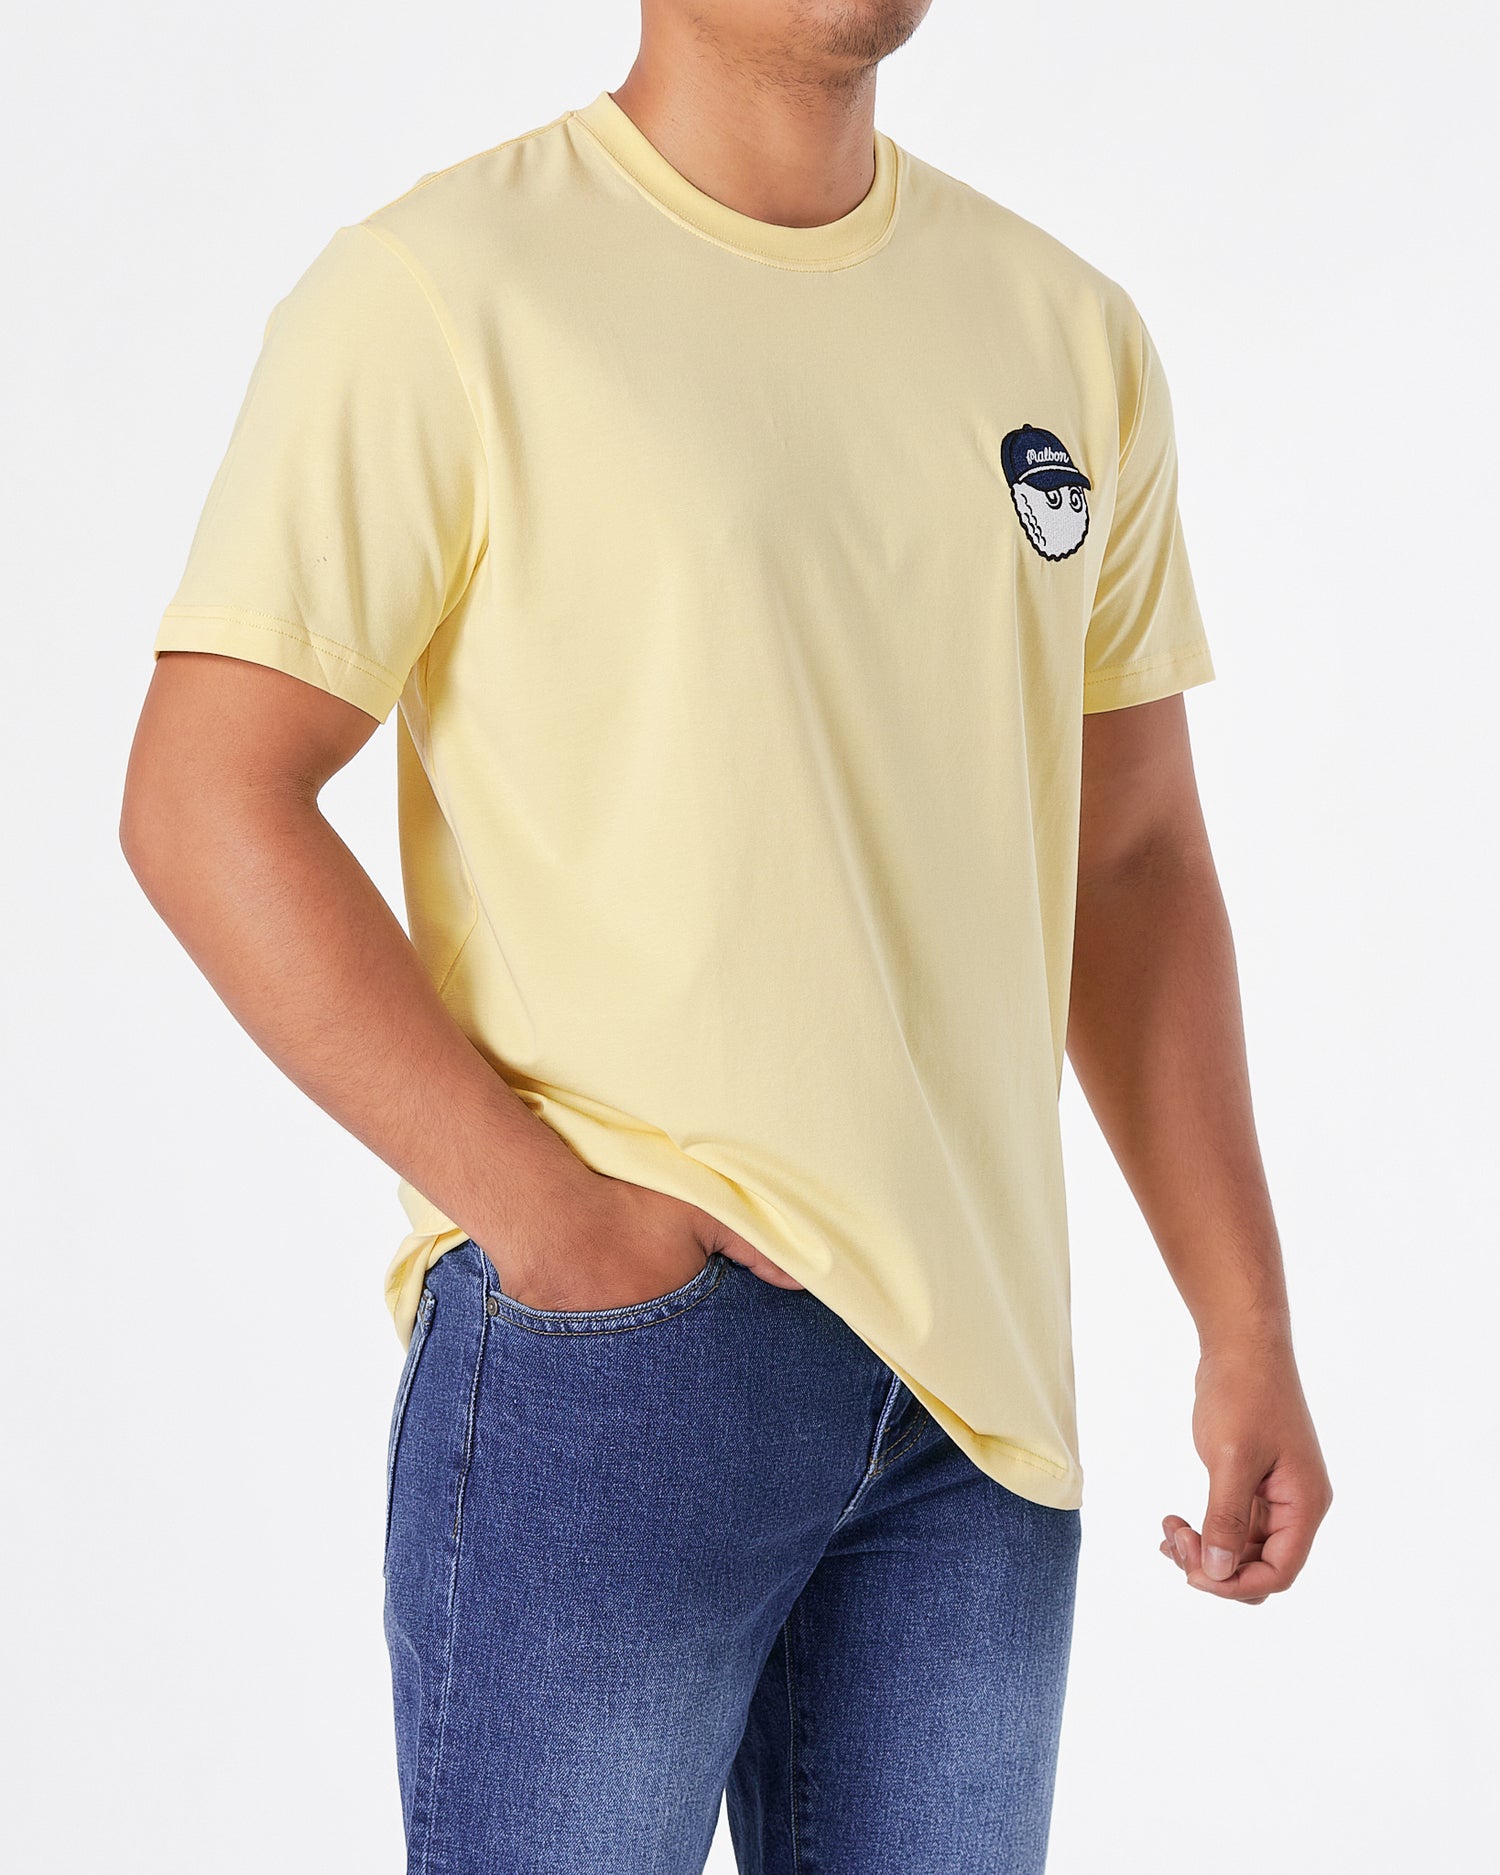 MAL Cartoon Embroidered Men Yellow T-Shirt 16.90